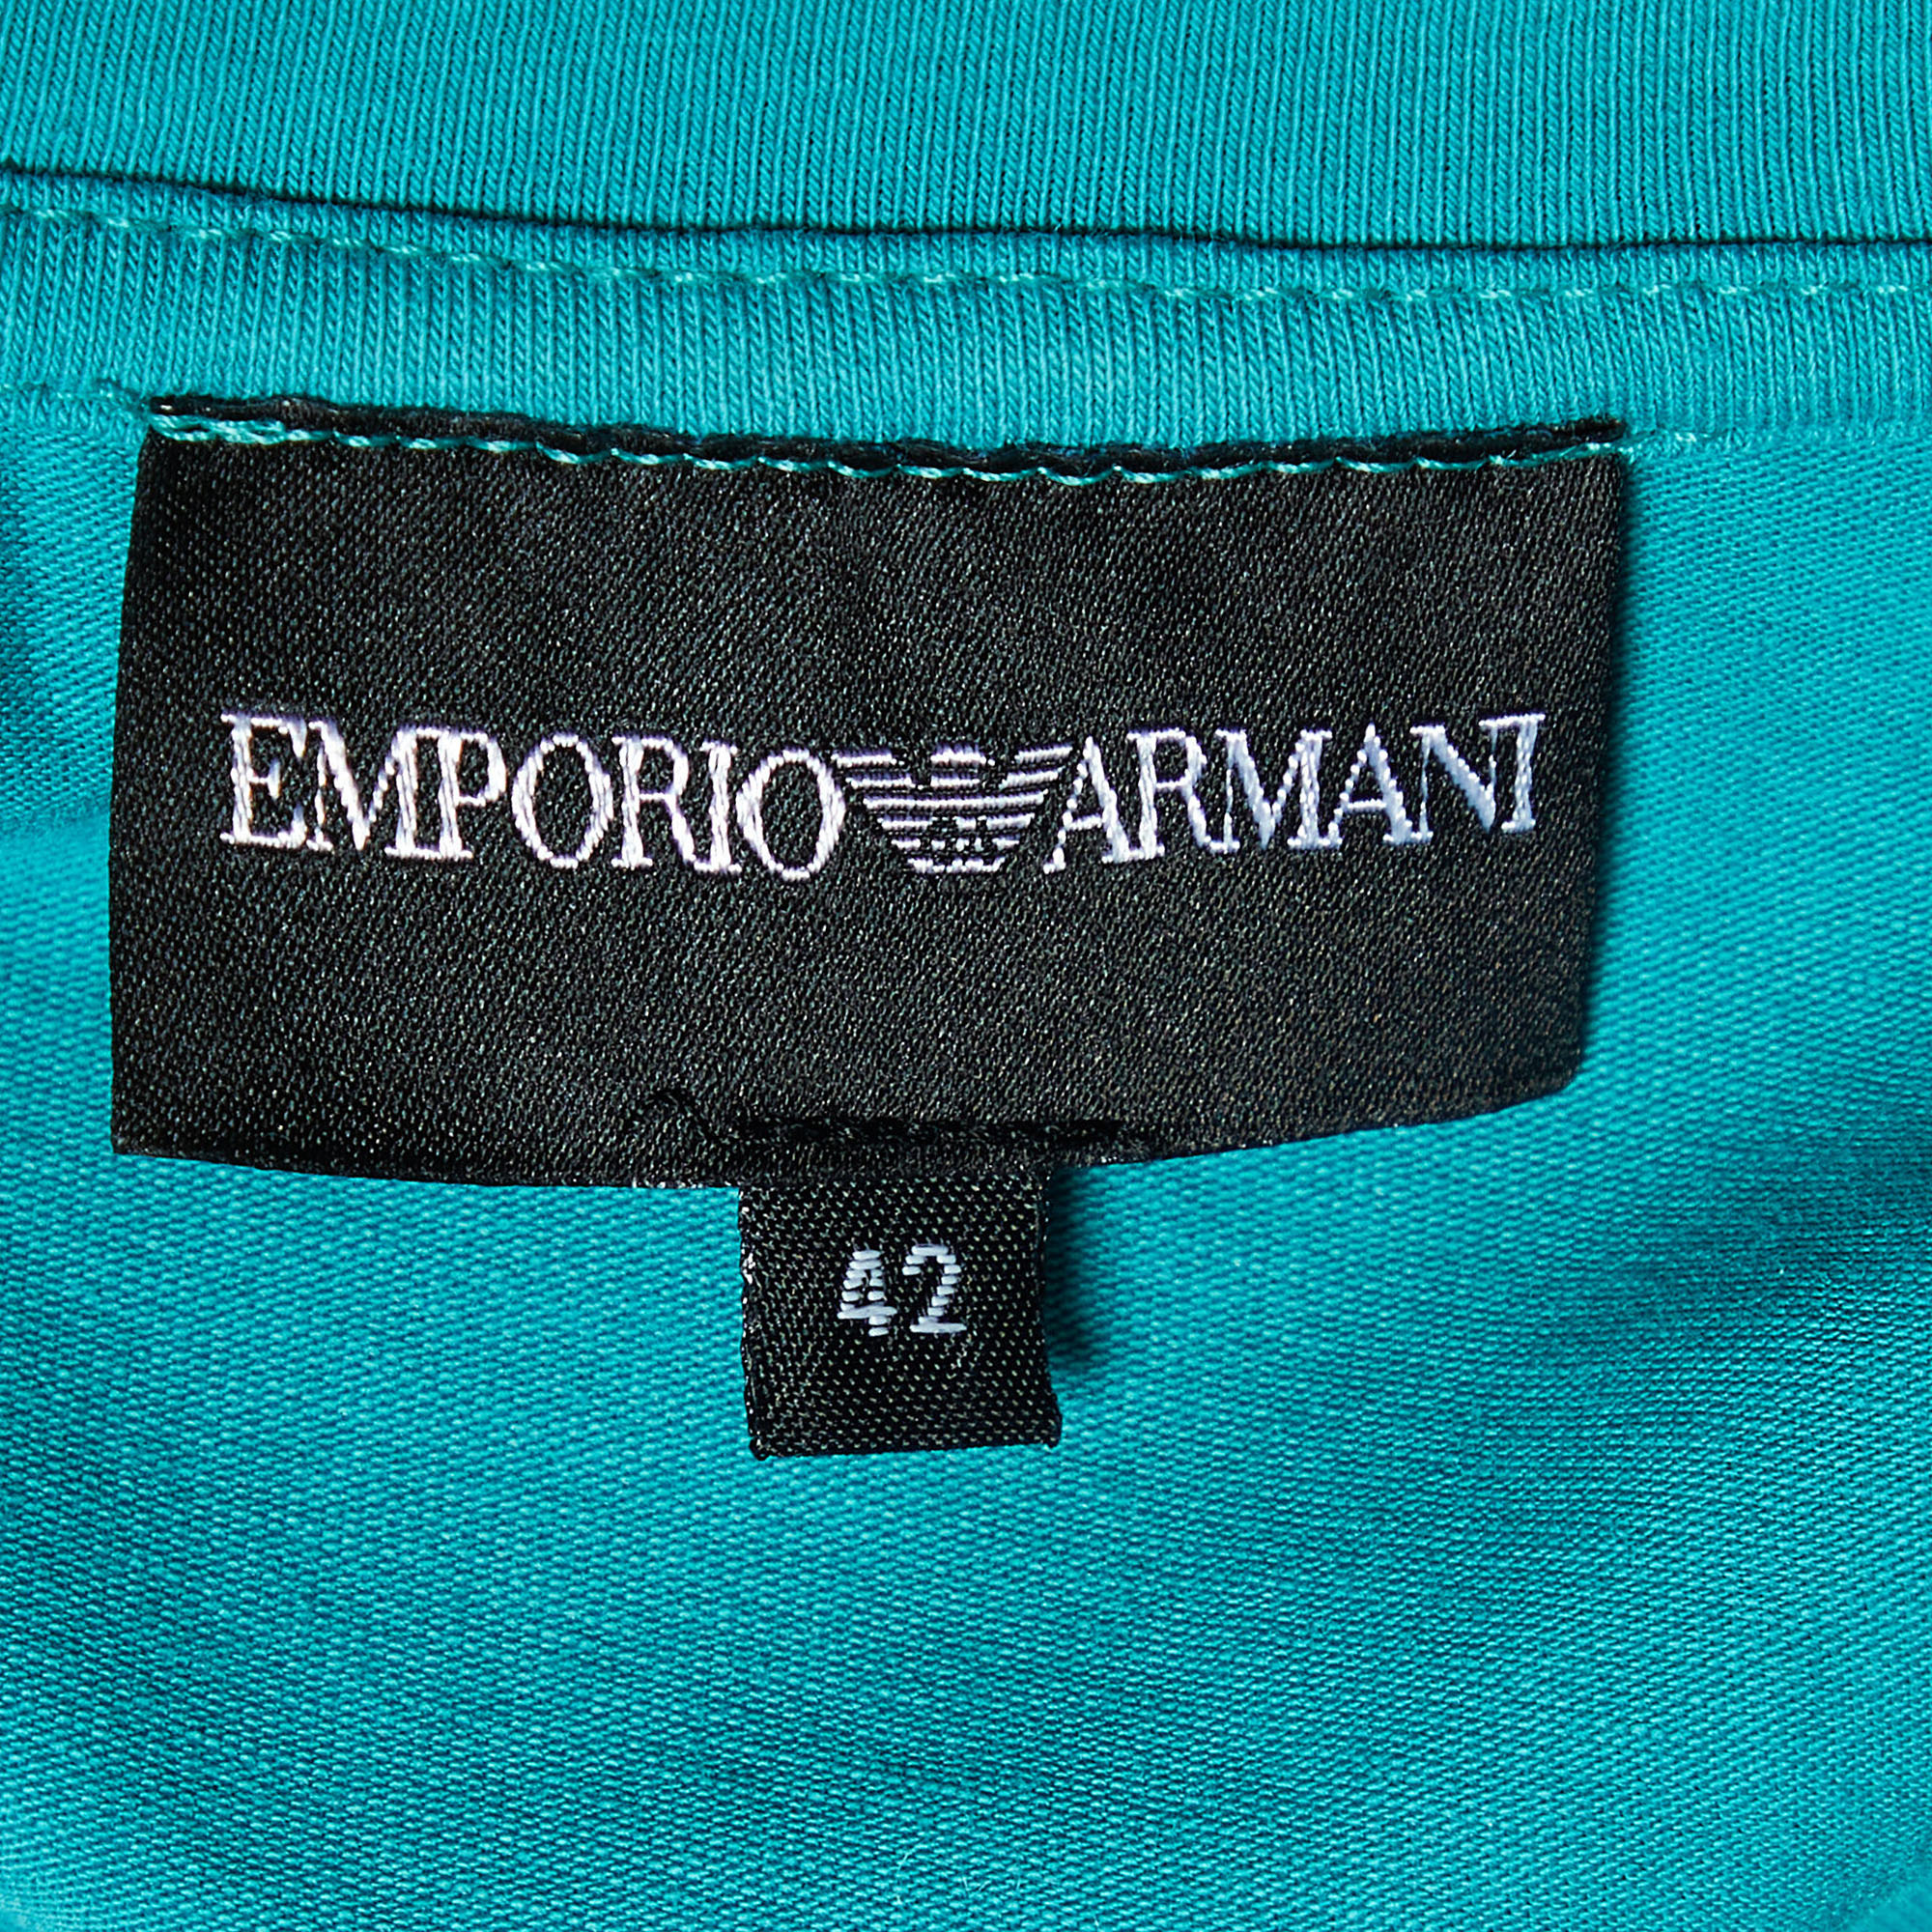 Emporio Armani Green Printed Cotton Knit T-Shirt M